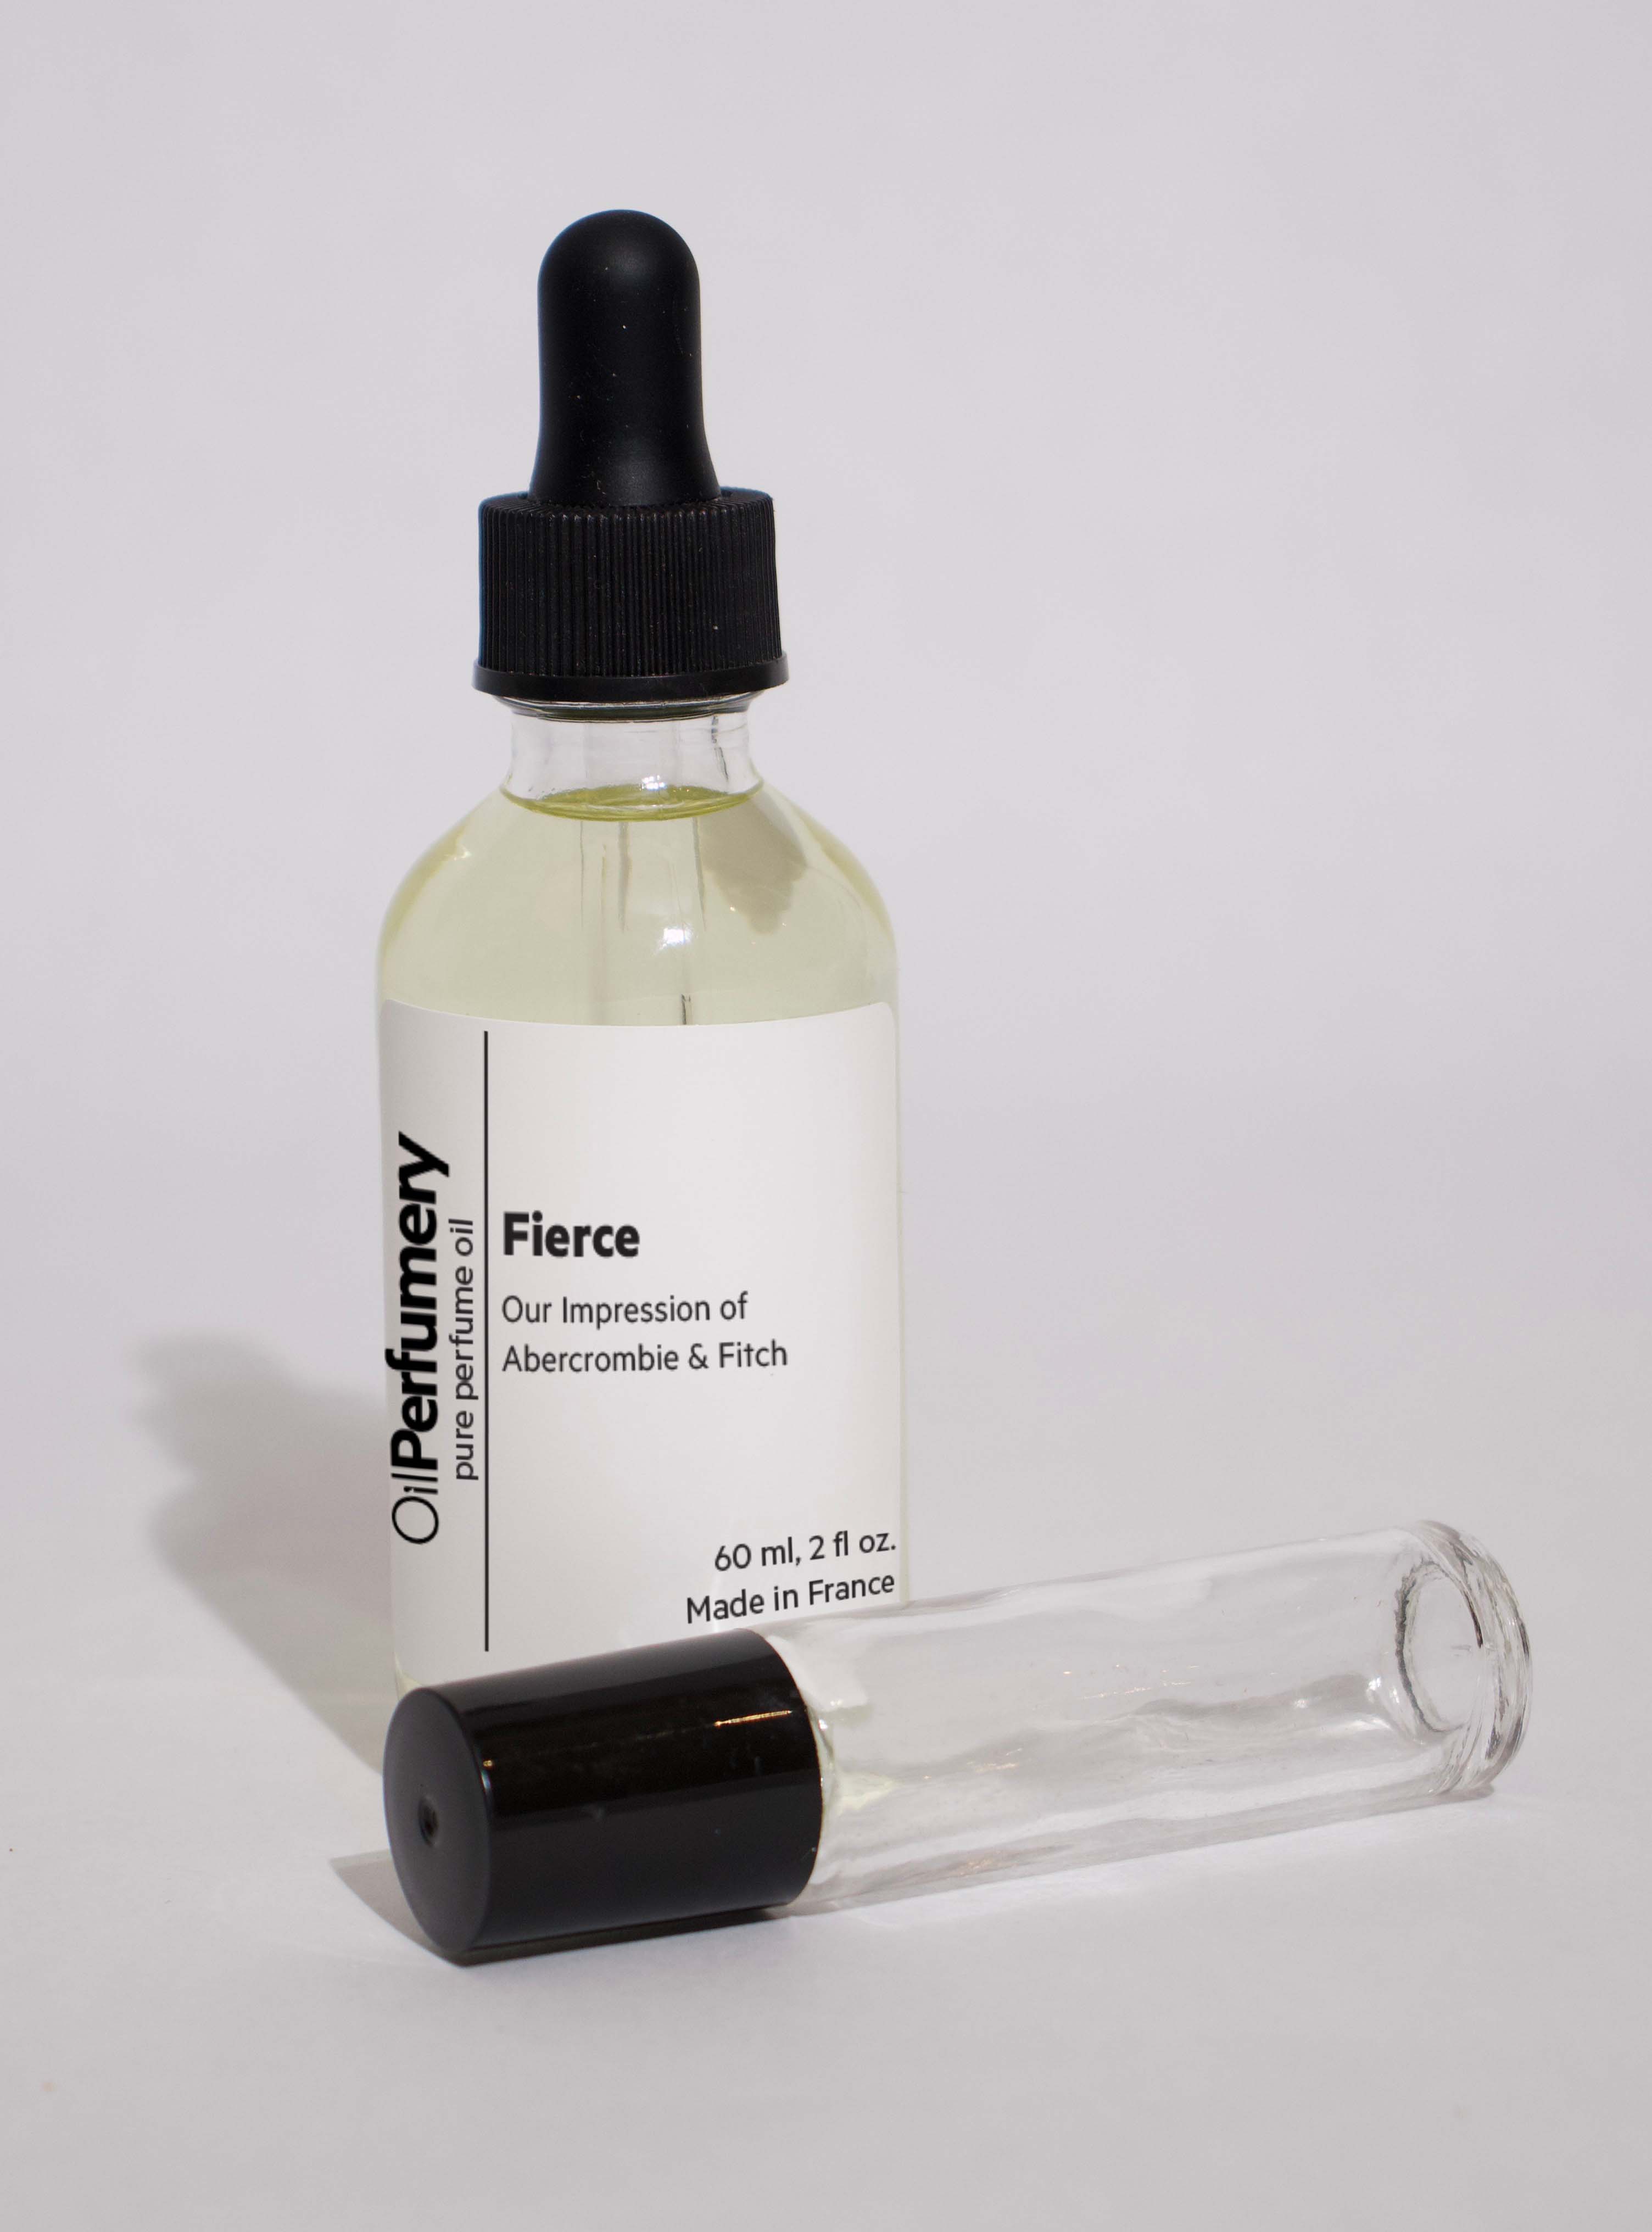 Oil Perfumery Impression of Abercrombie & Fitch - Fierce